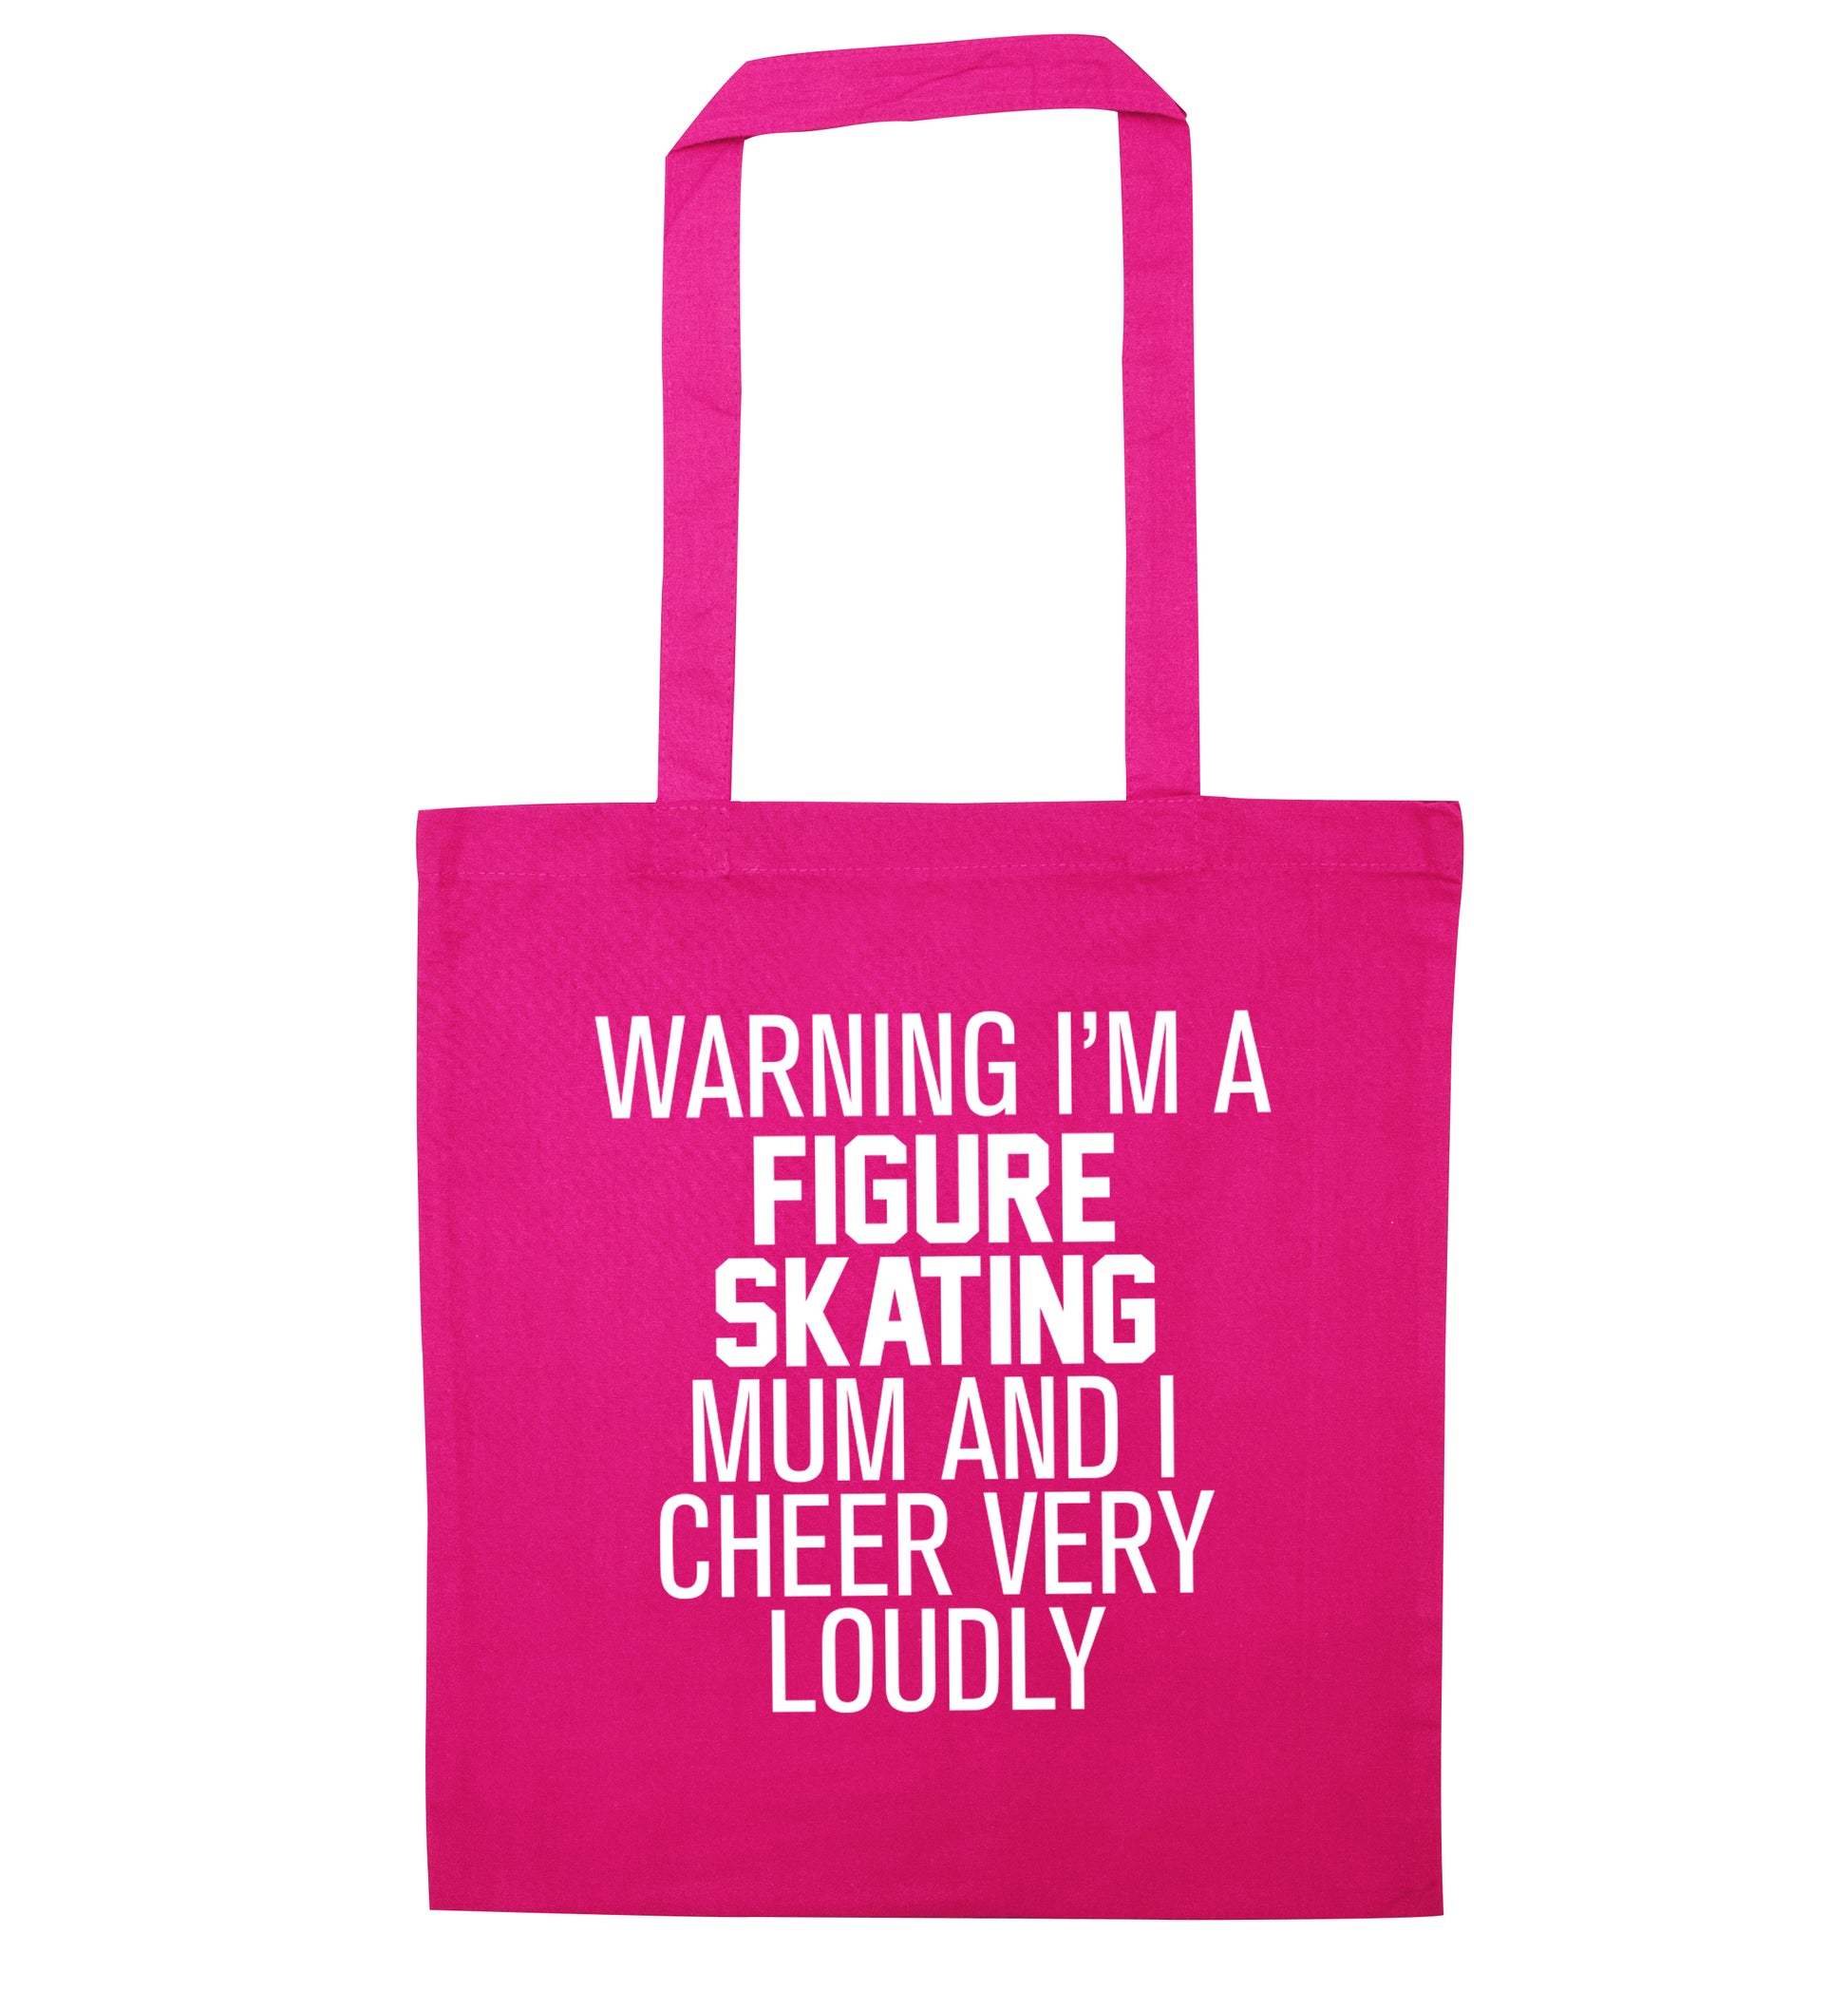 Warning I'm a figure skating mum and I cheer very loudly pink tote bag